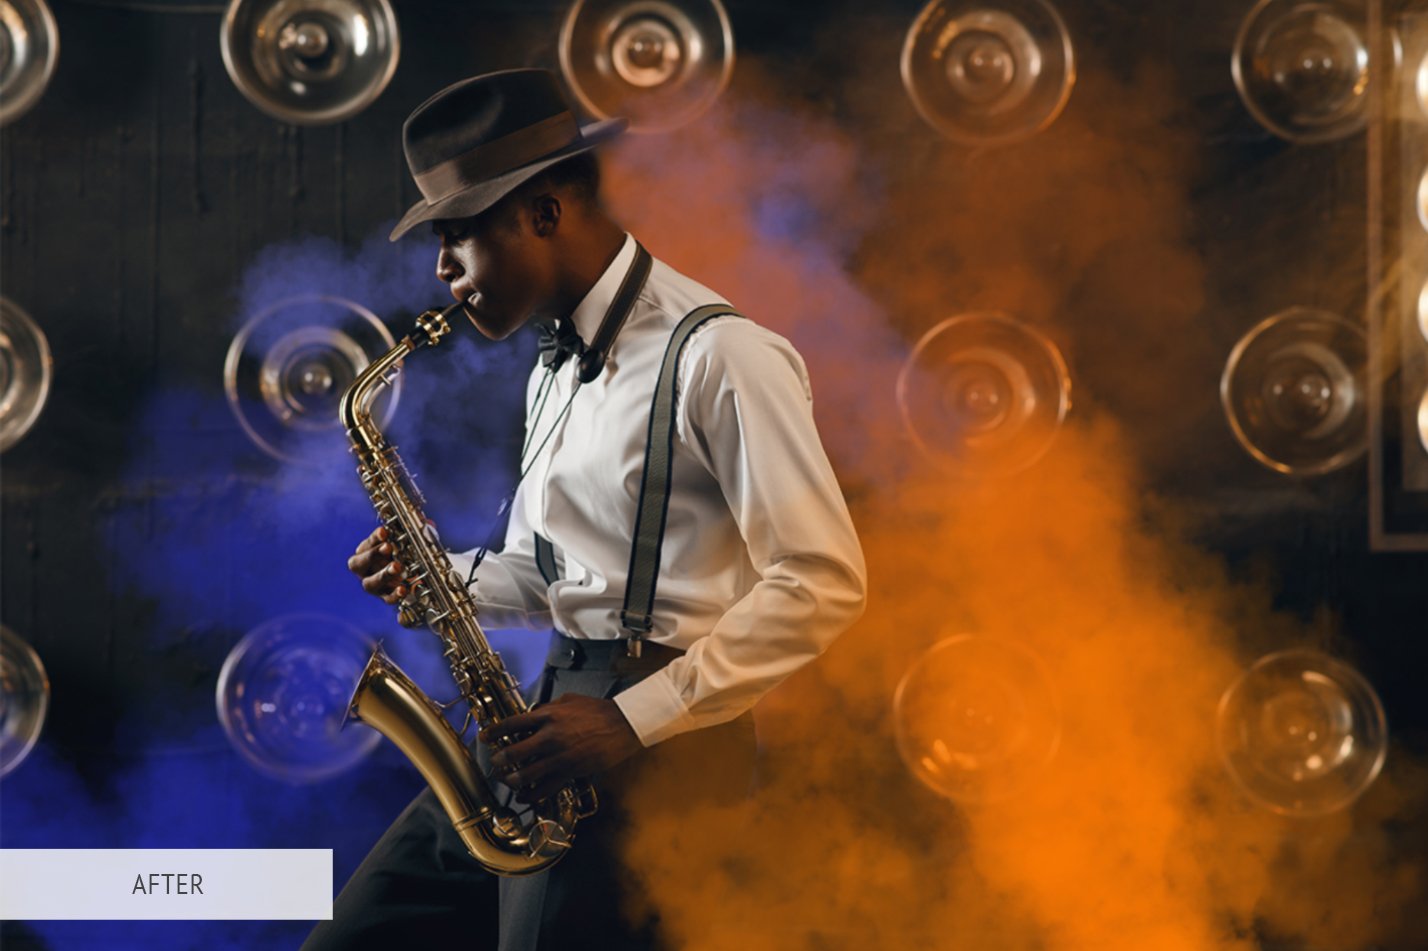 black jazzman in hat plays the saxophone on stage lnhtgd5 333